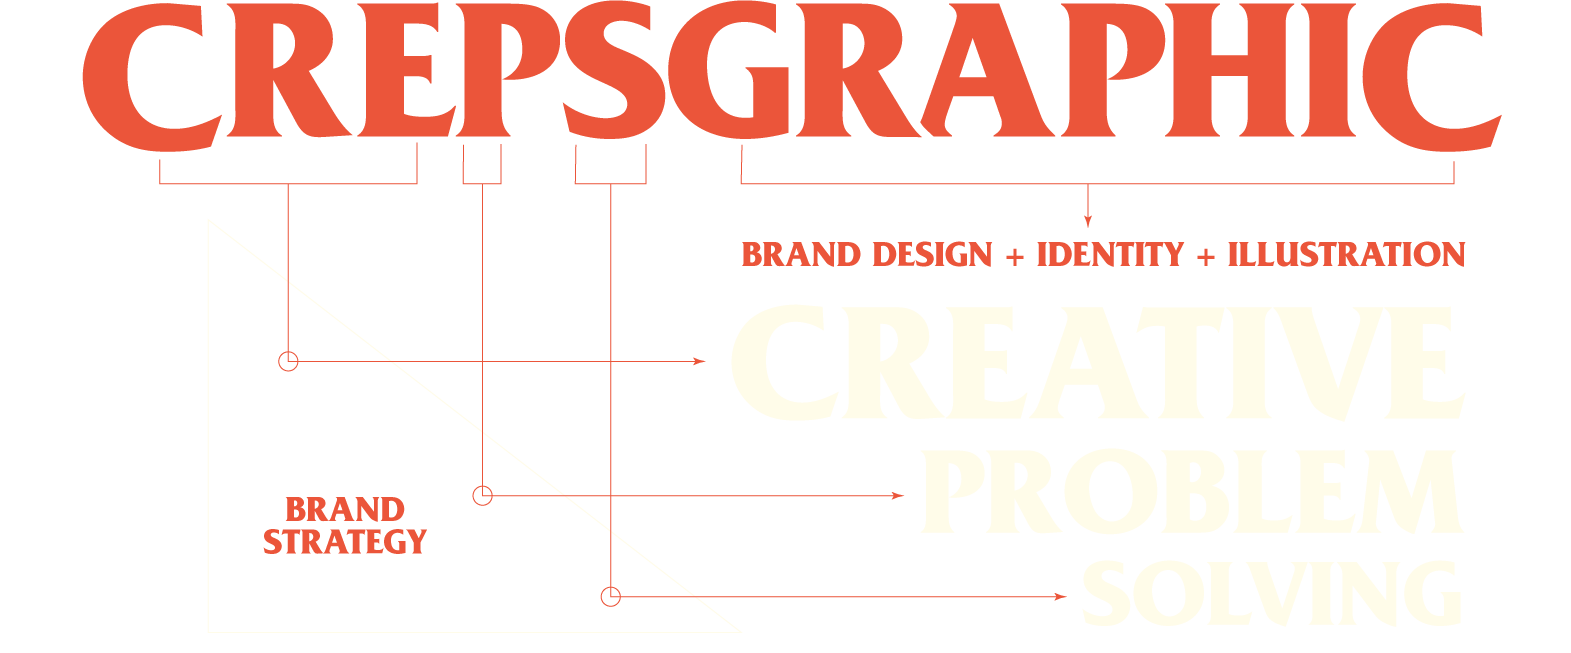 crepsgraphic_brand_breakdown2